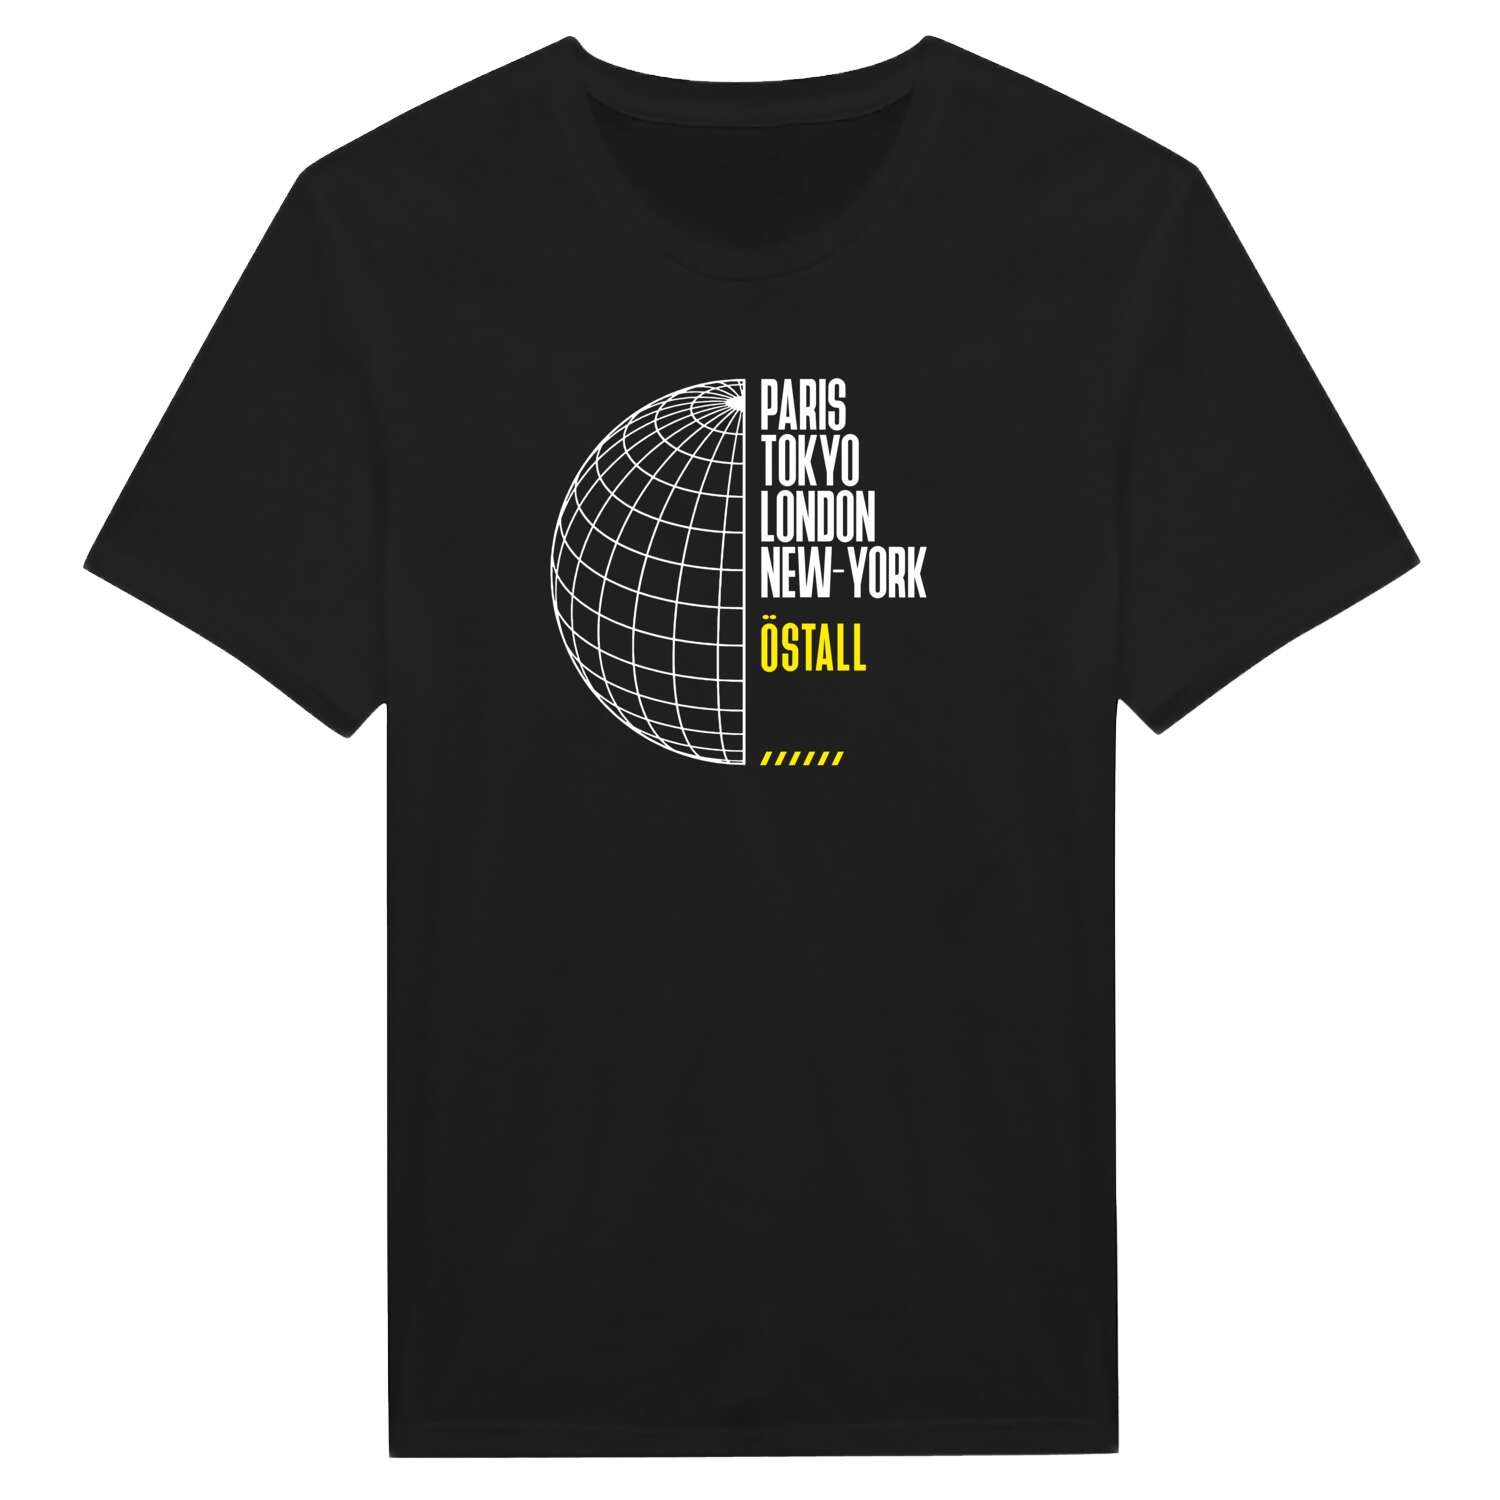 Östall T-Shirt »Paris Tokyo London«